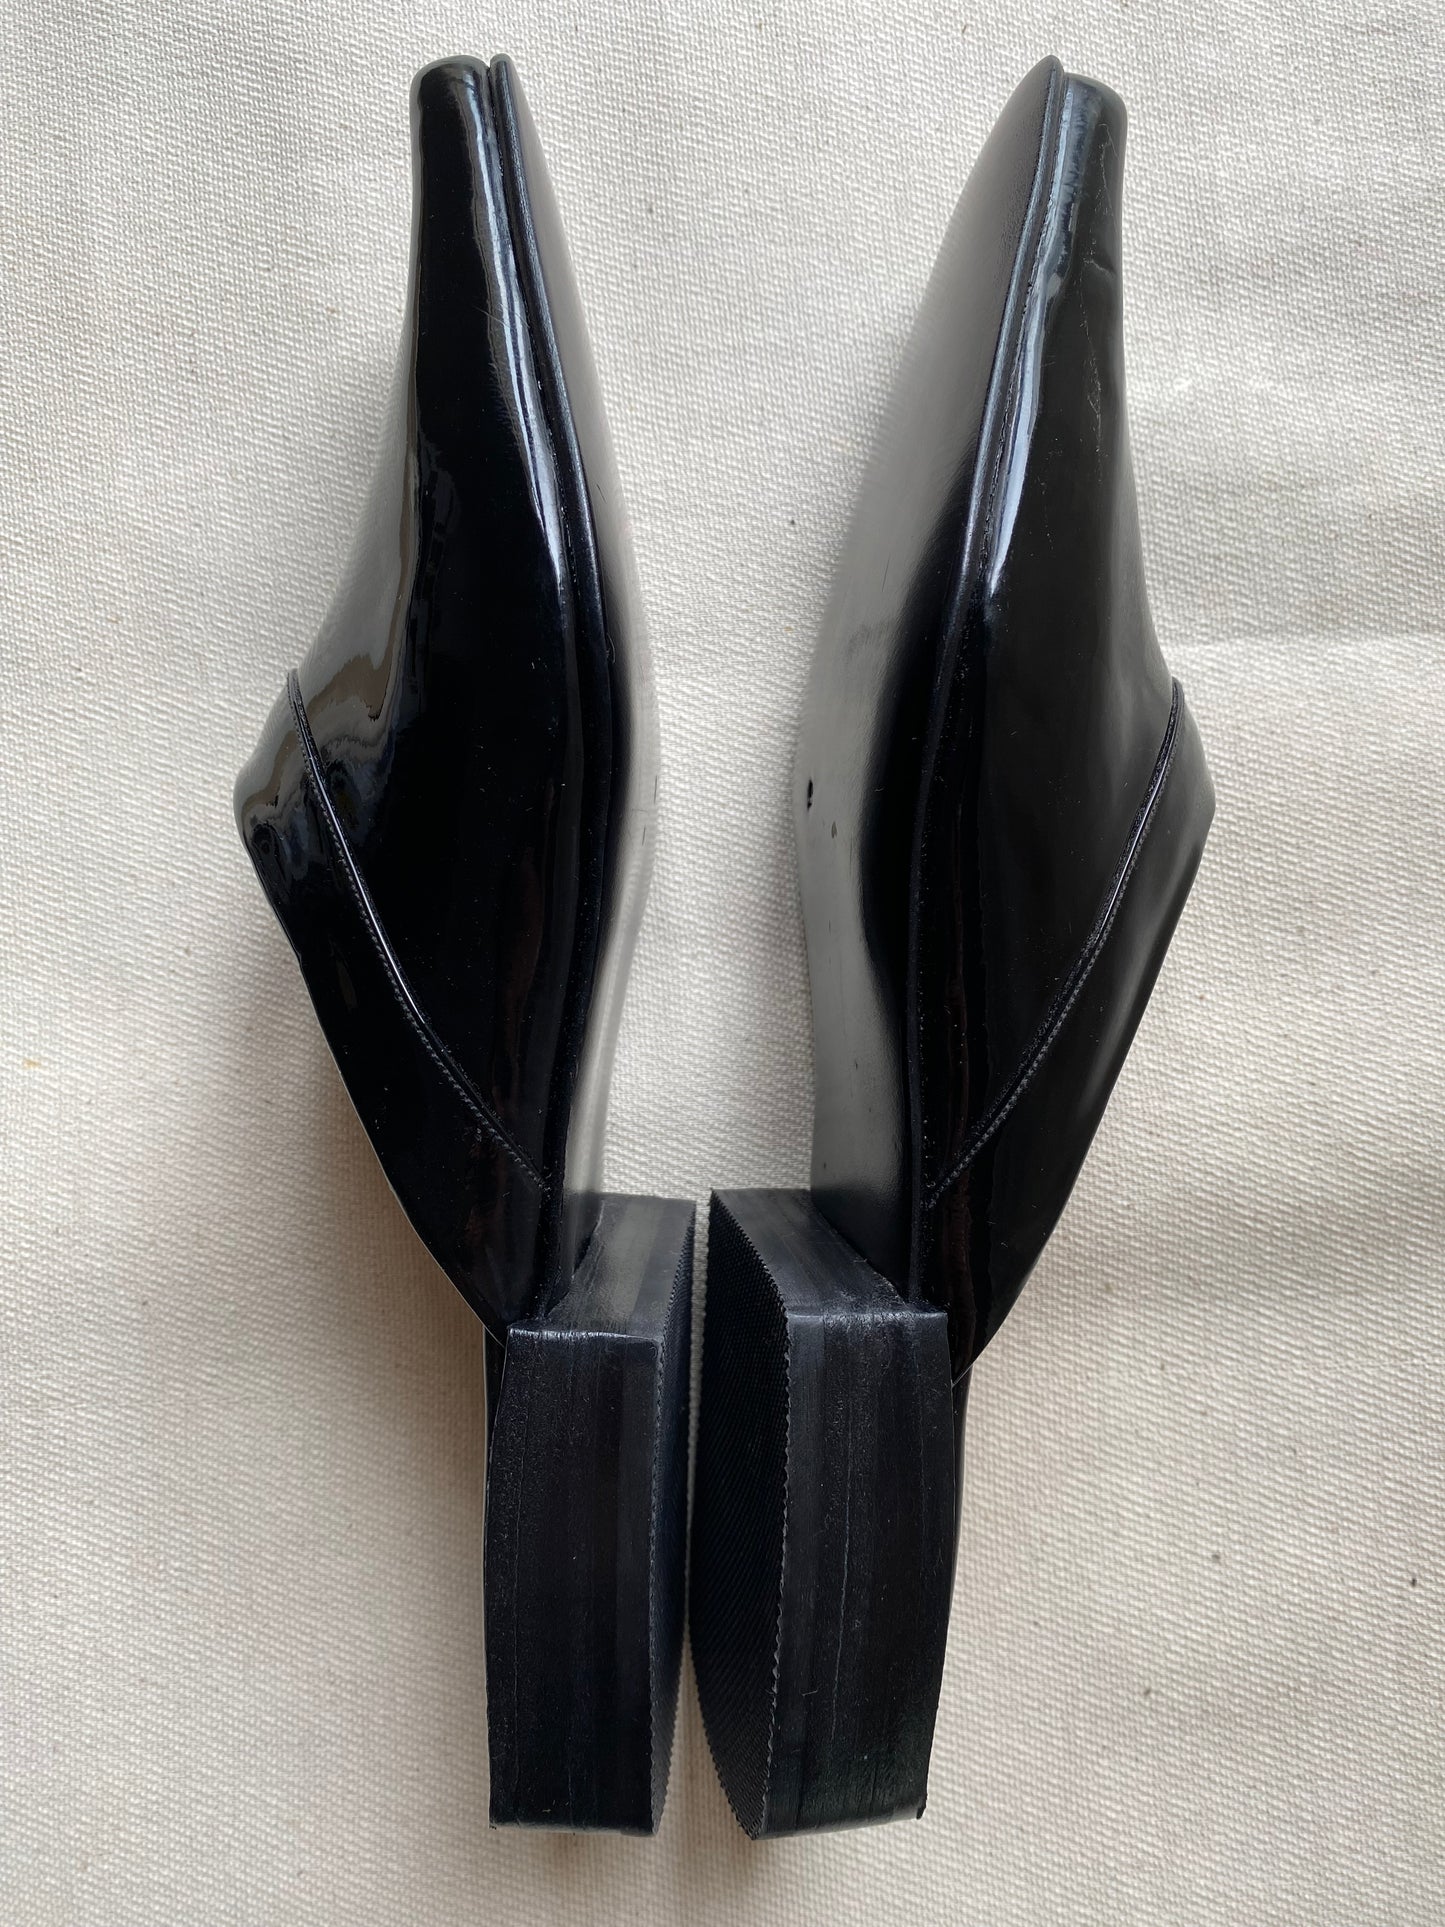 Alba Mule in Black Patent Size 39